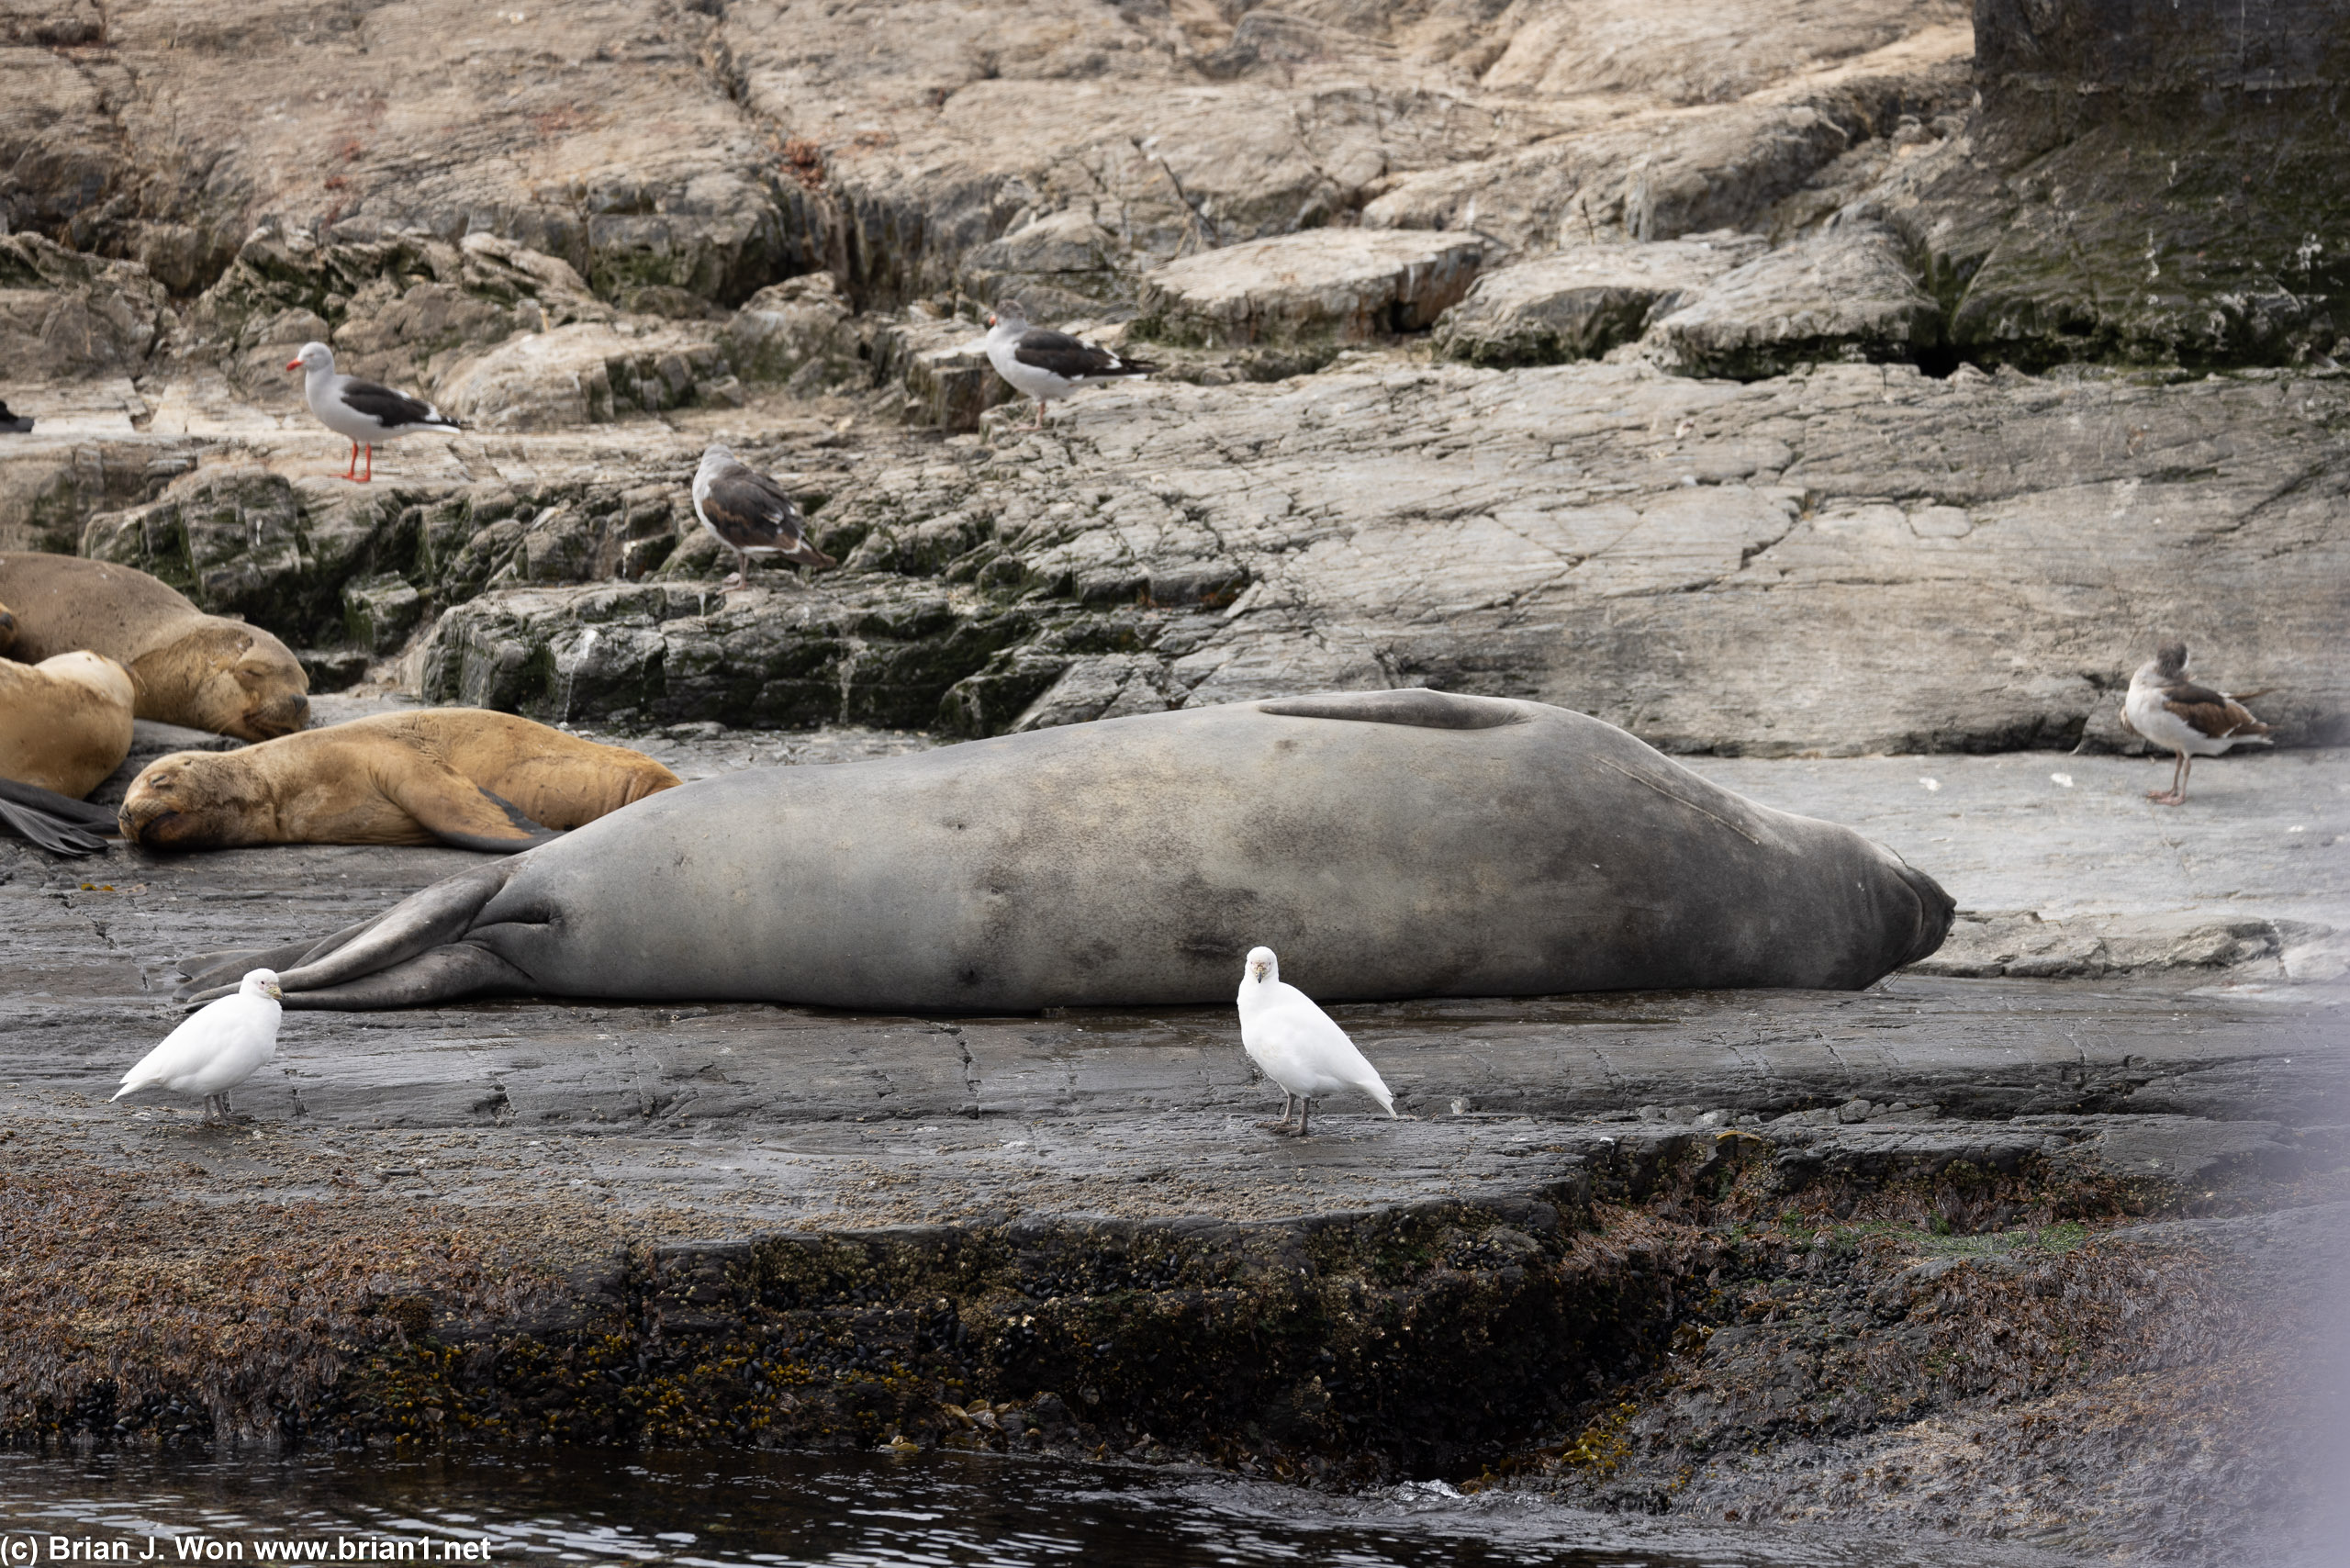 One lone elephant seal.